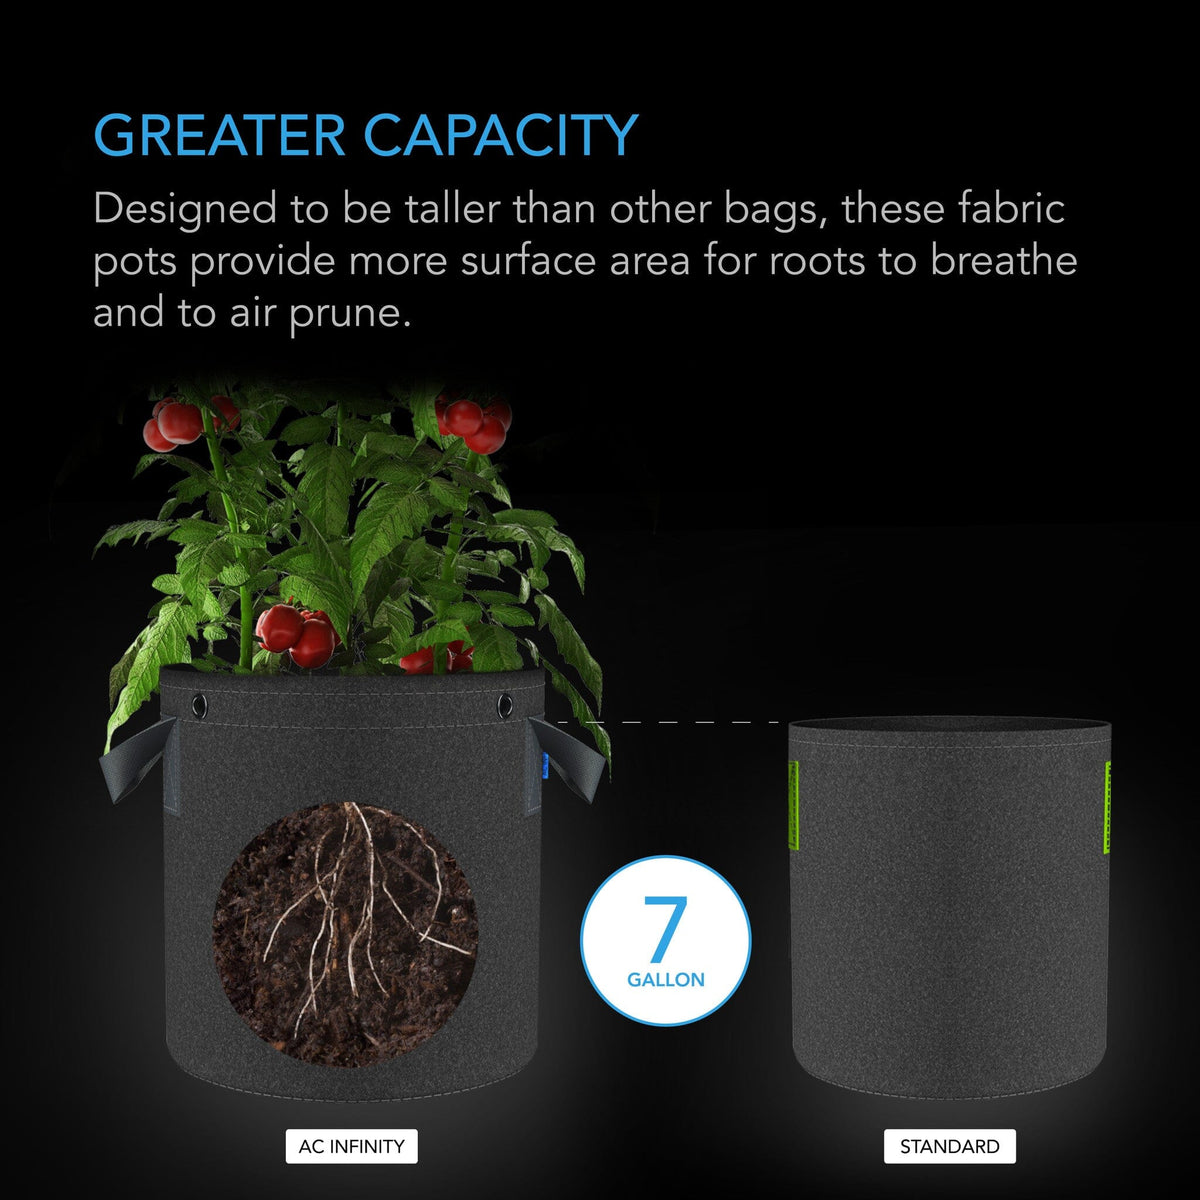 7 Gallon Greater Capacity fabric pots